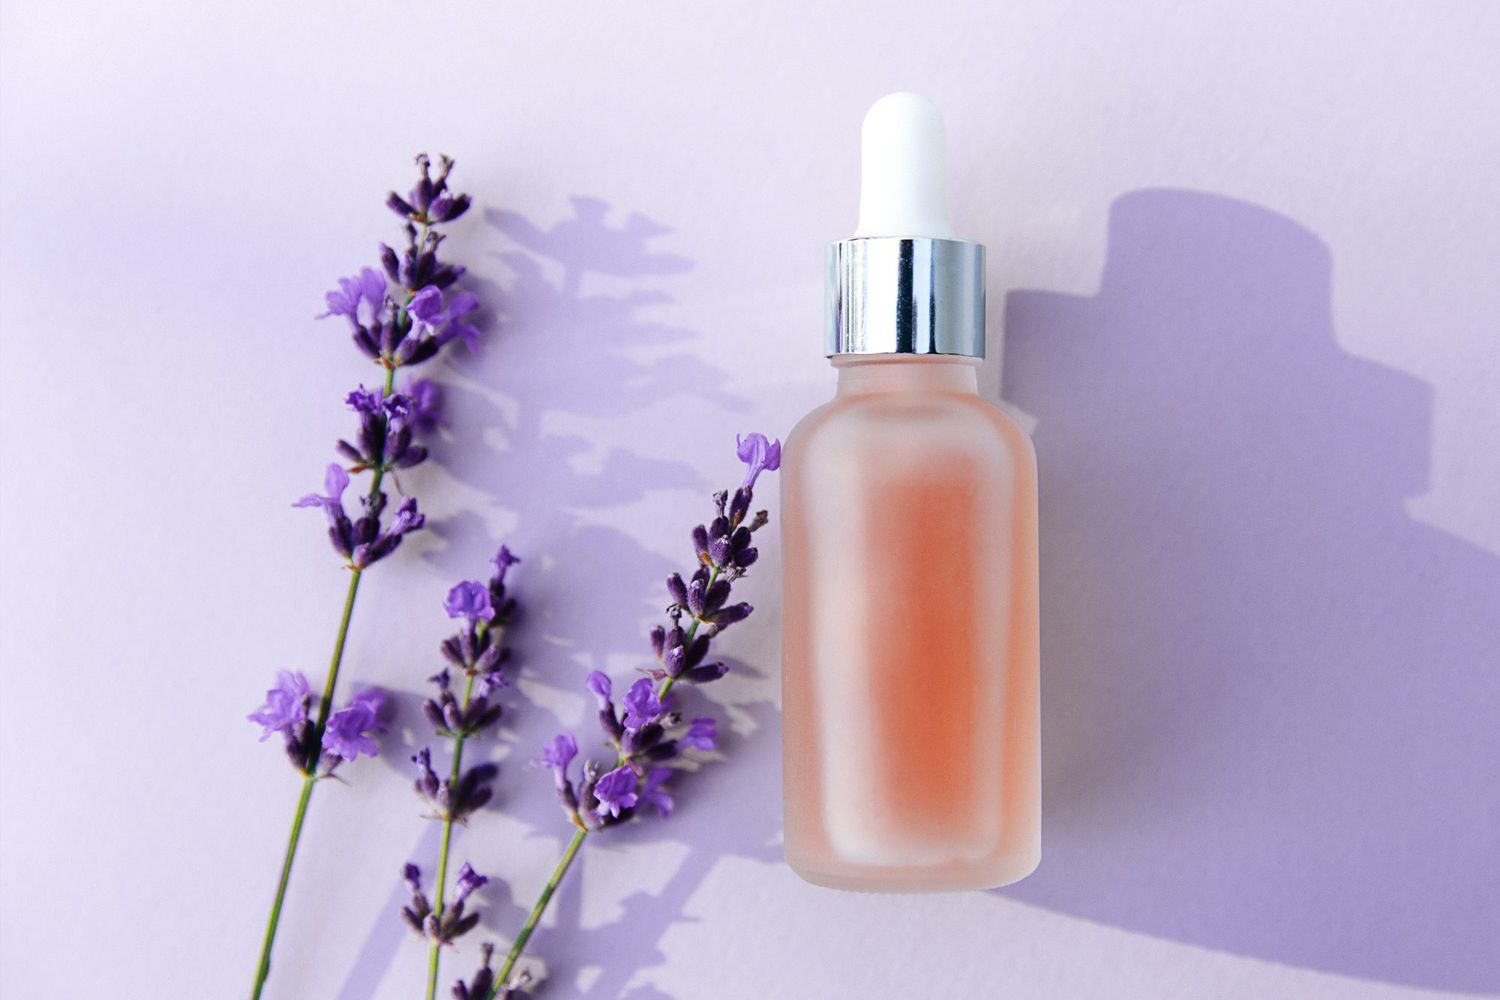 Lavender aromatherapy bottle on a purple background